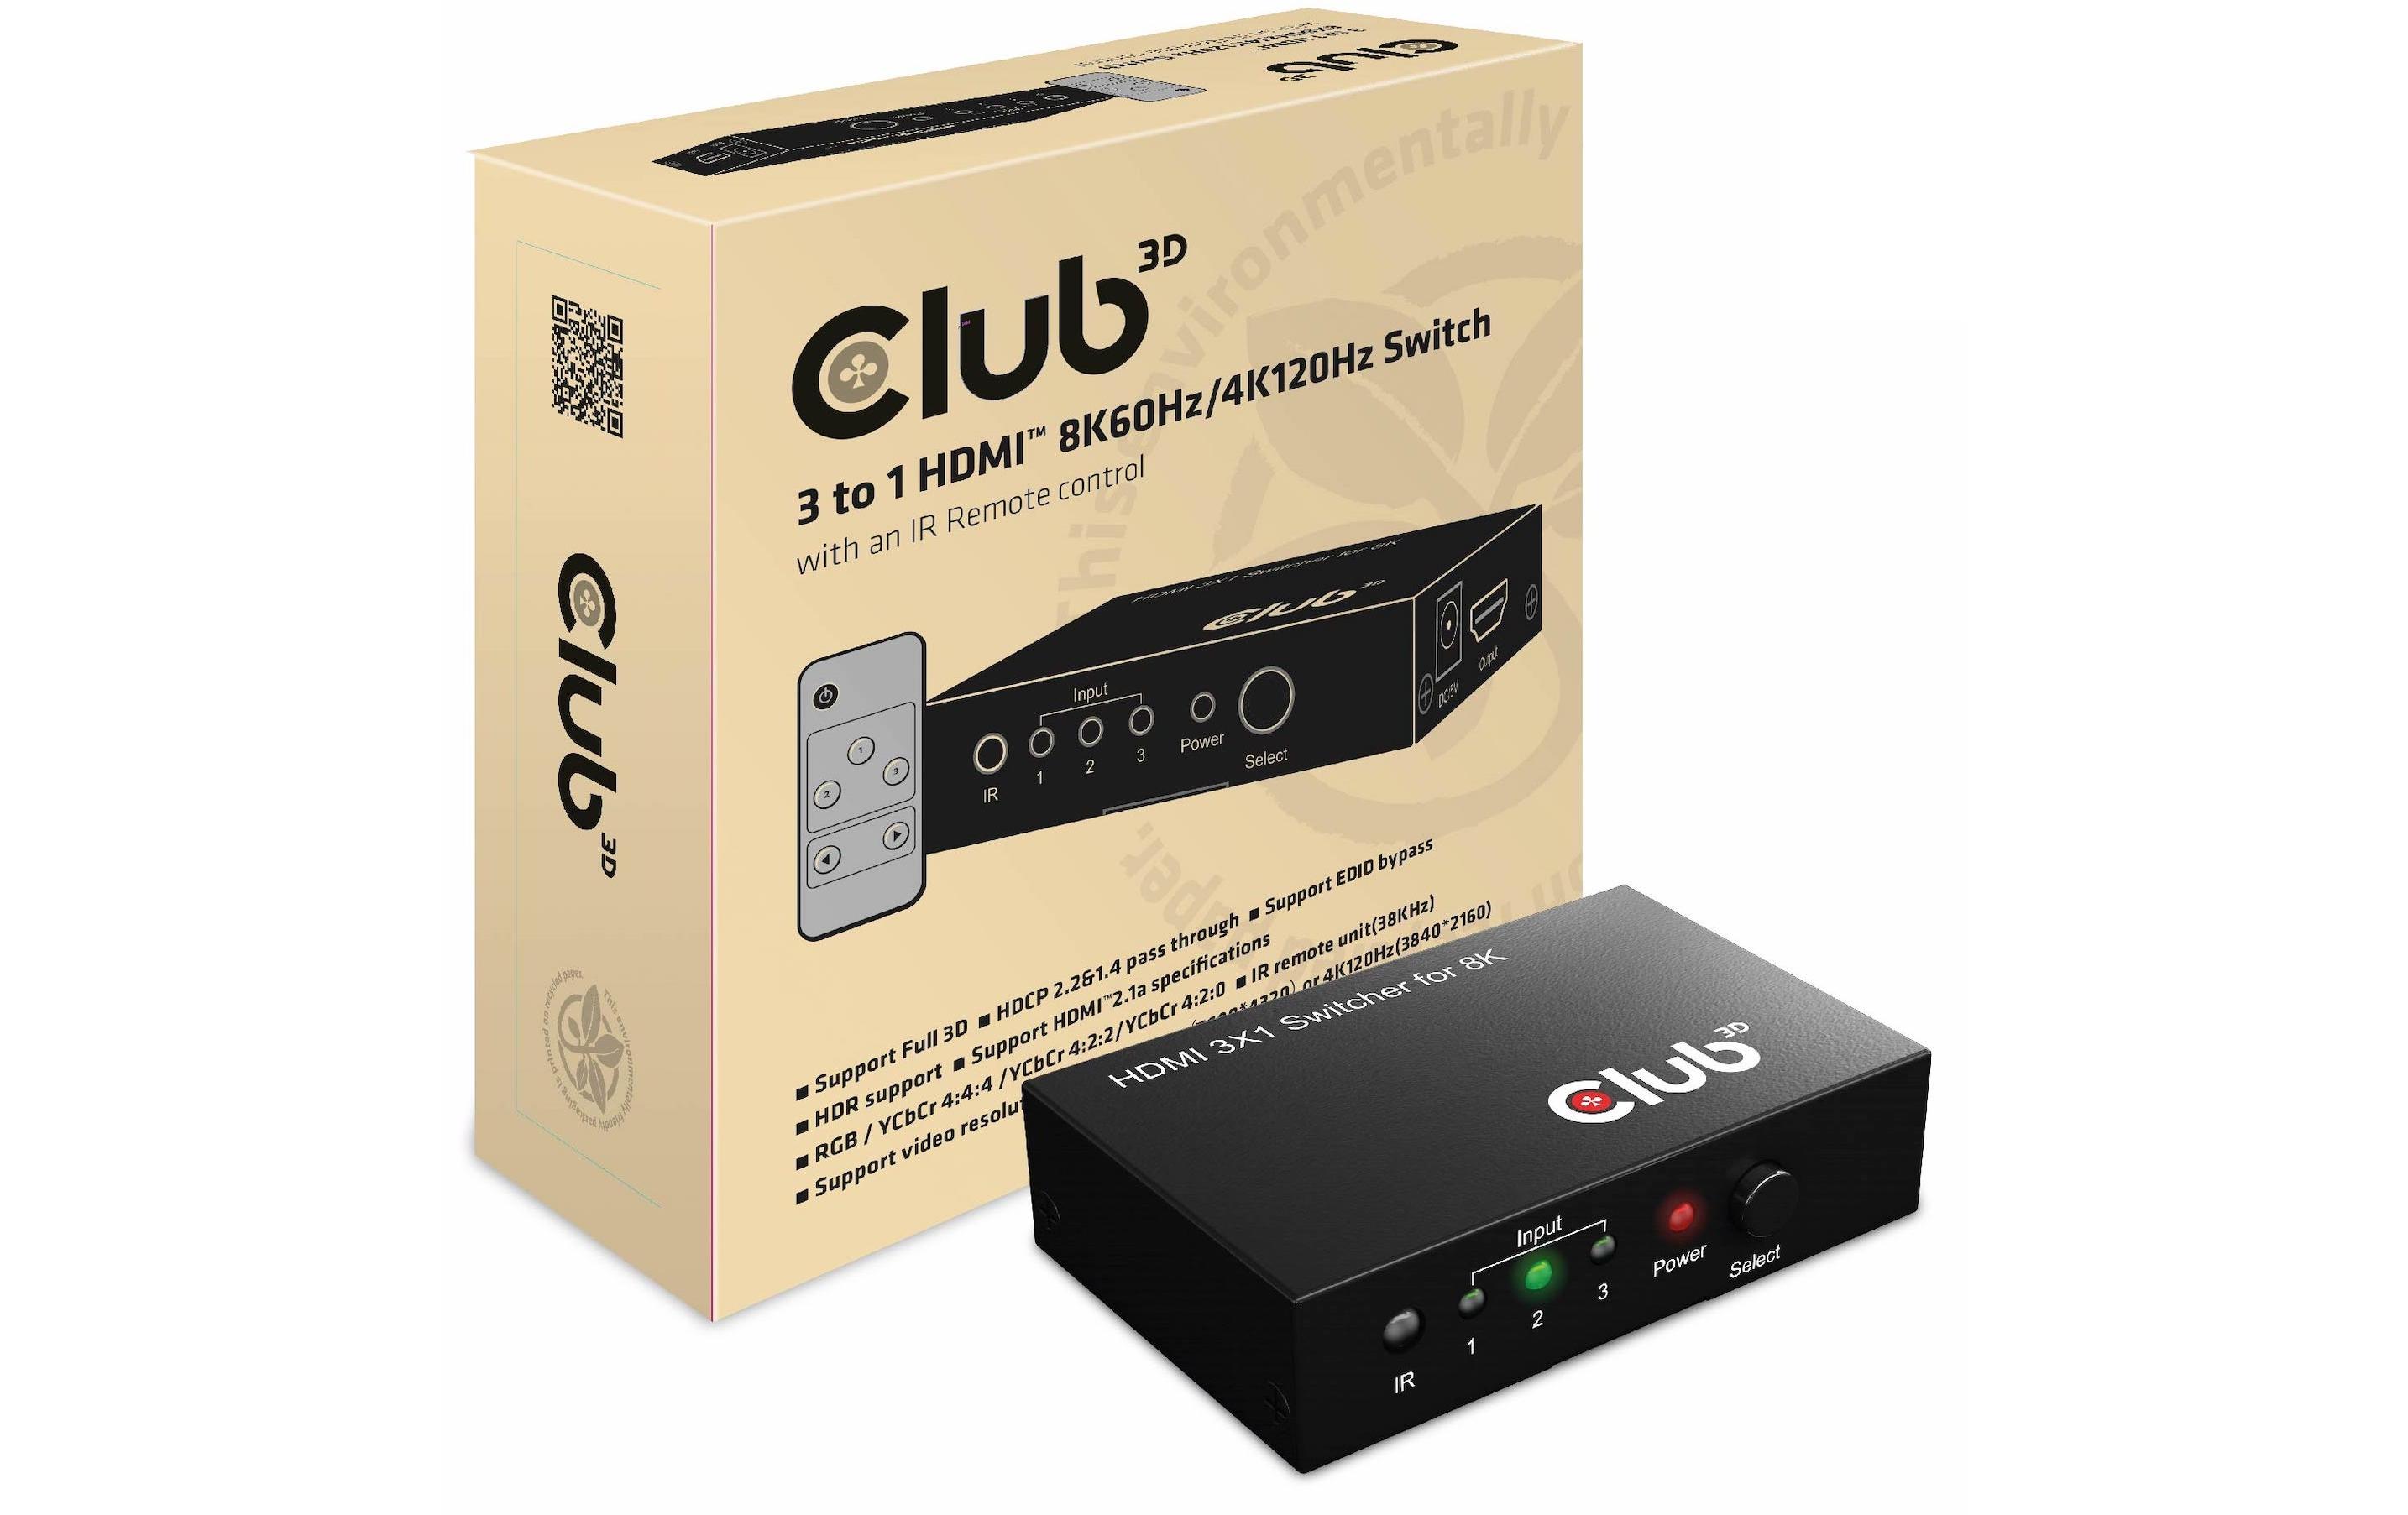 Club 3D Umschalter CSV-1381 HDMI